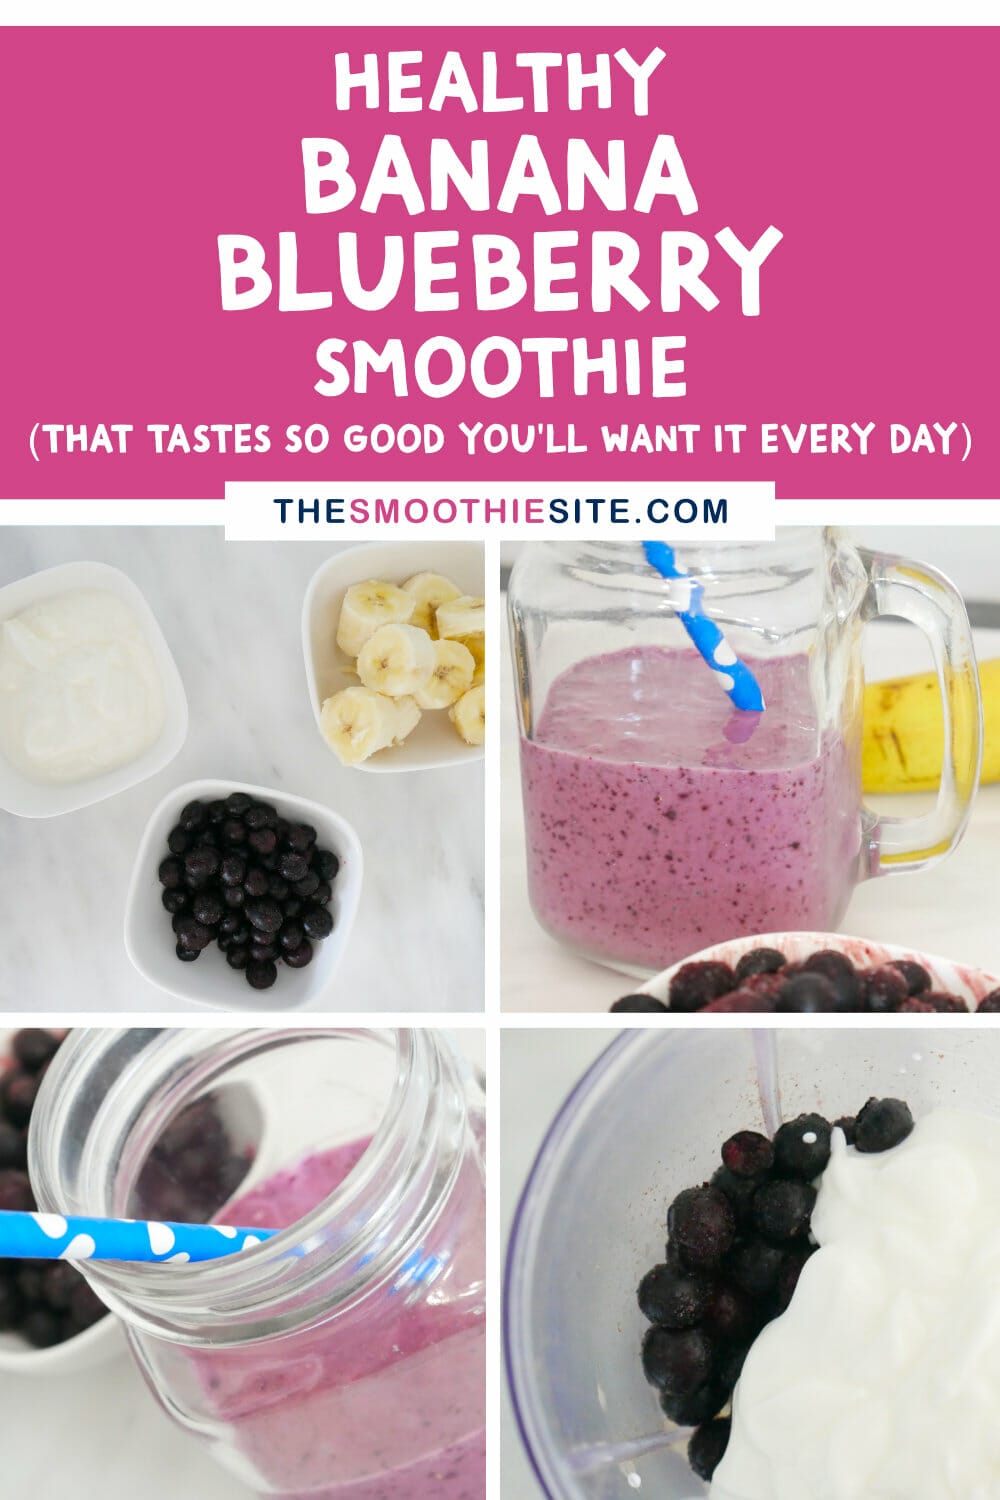 Healthy banana blueberry smoothie recipe (+ important tips!) via @thesmoothiesite